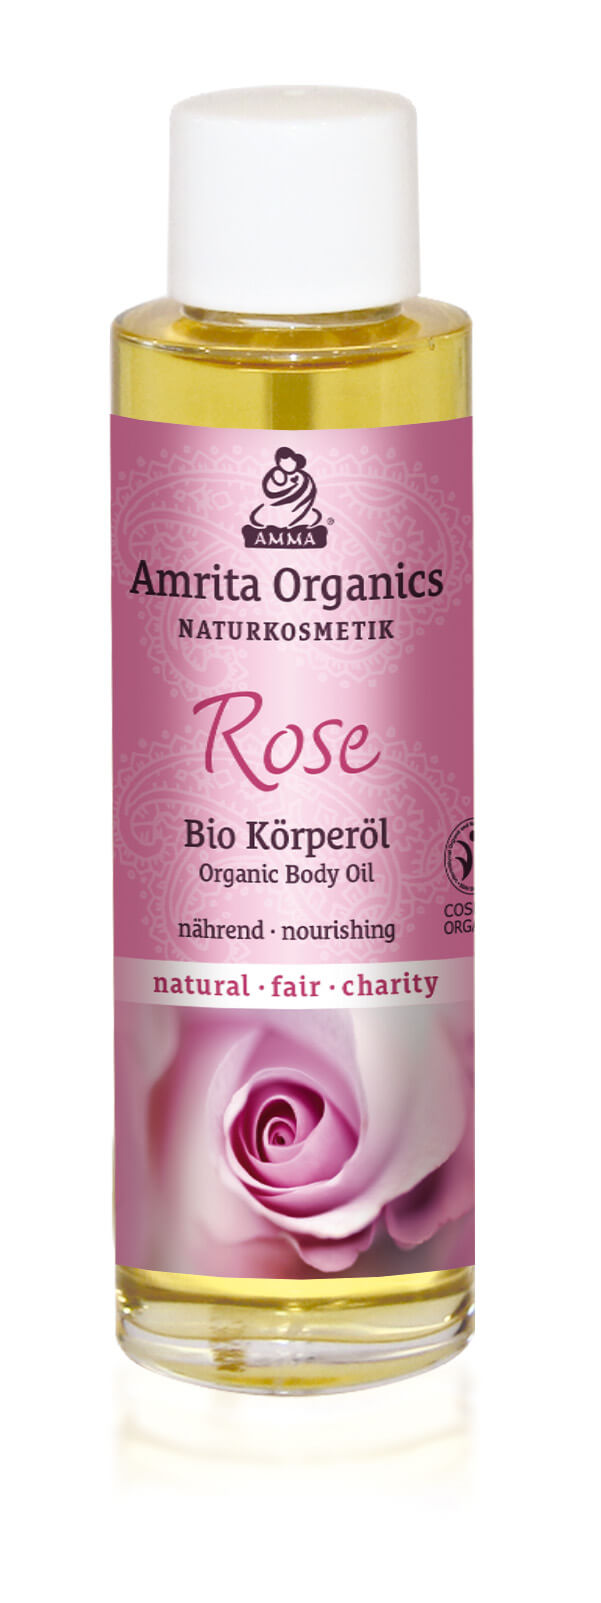 Body Oil Rose, organic